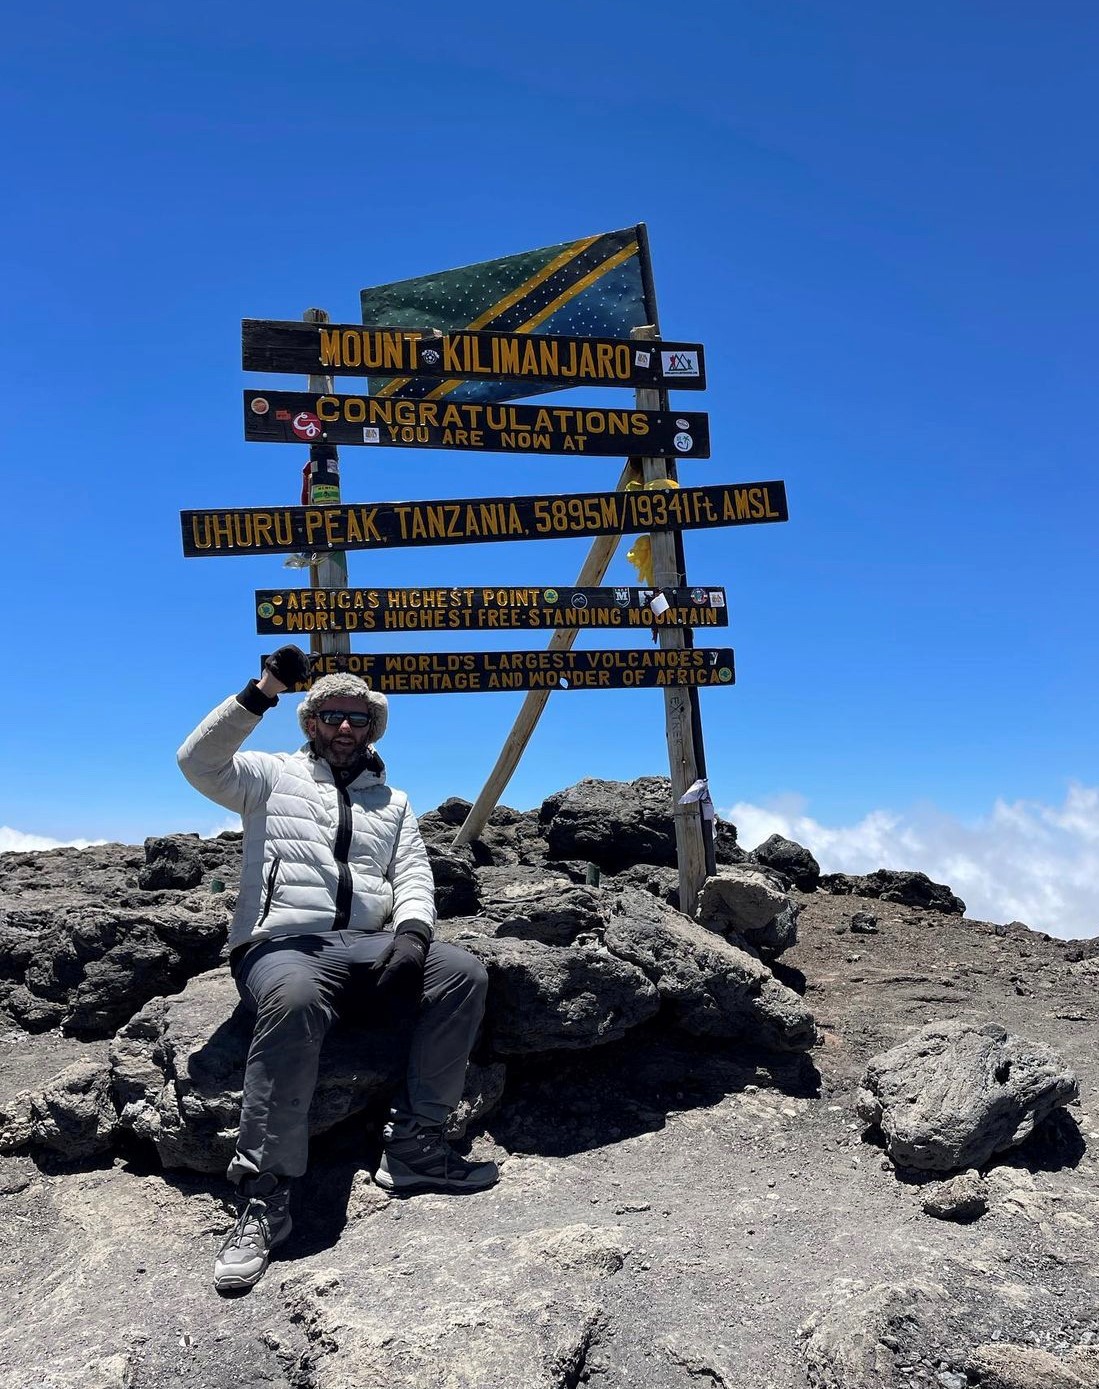 Dan Hodges at the summit of Mount Kilimanjaro